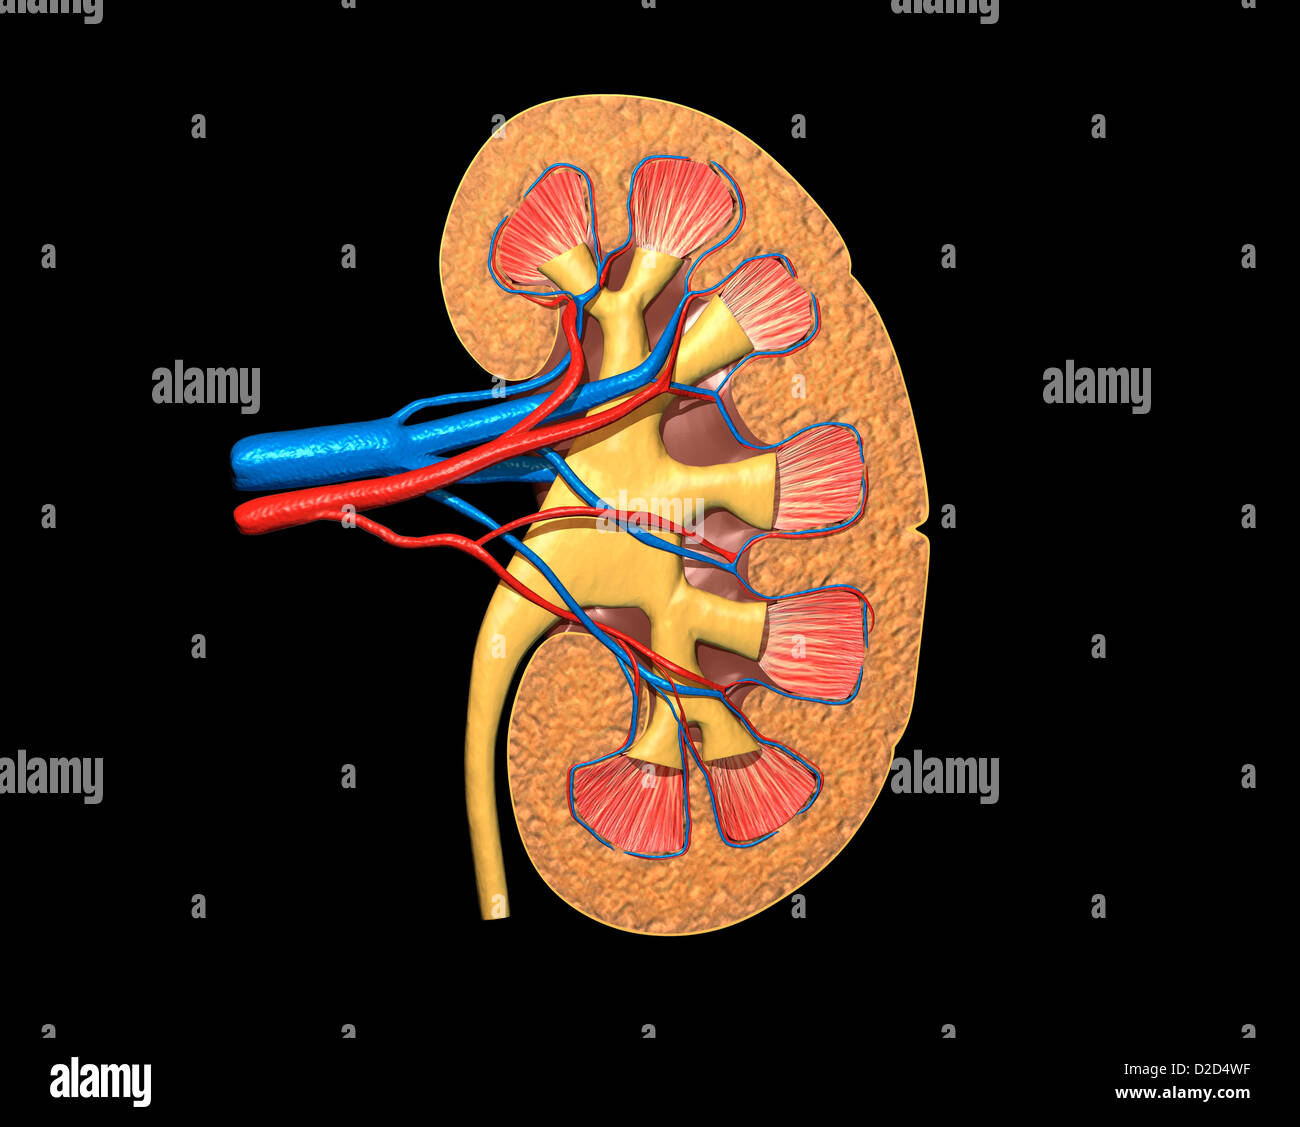 Human kidney computer artwork Stock Photo